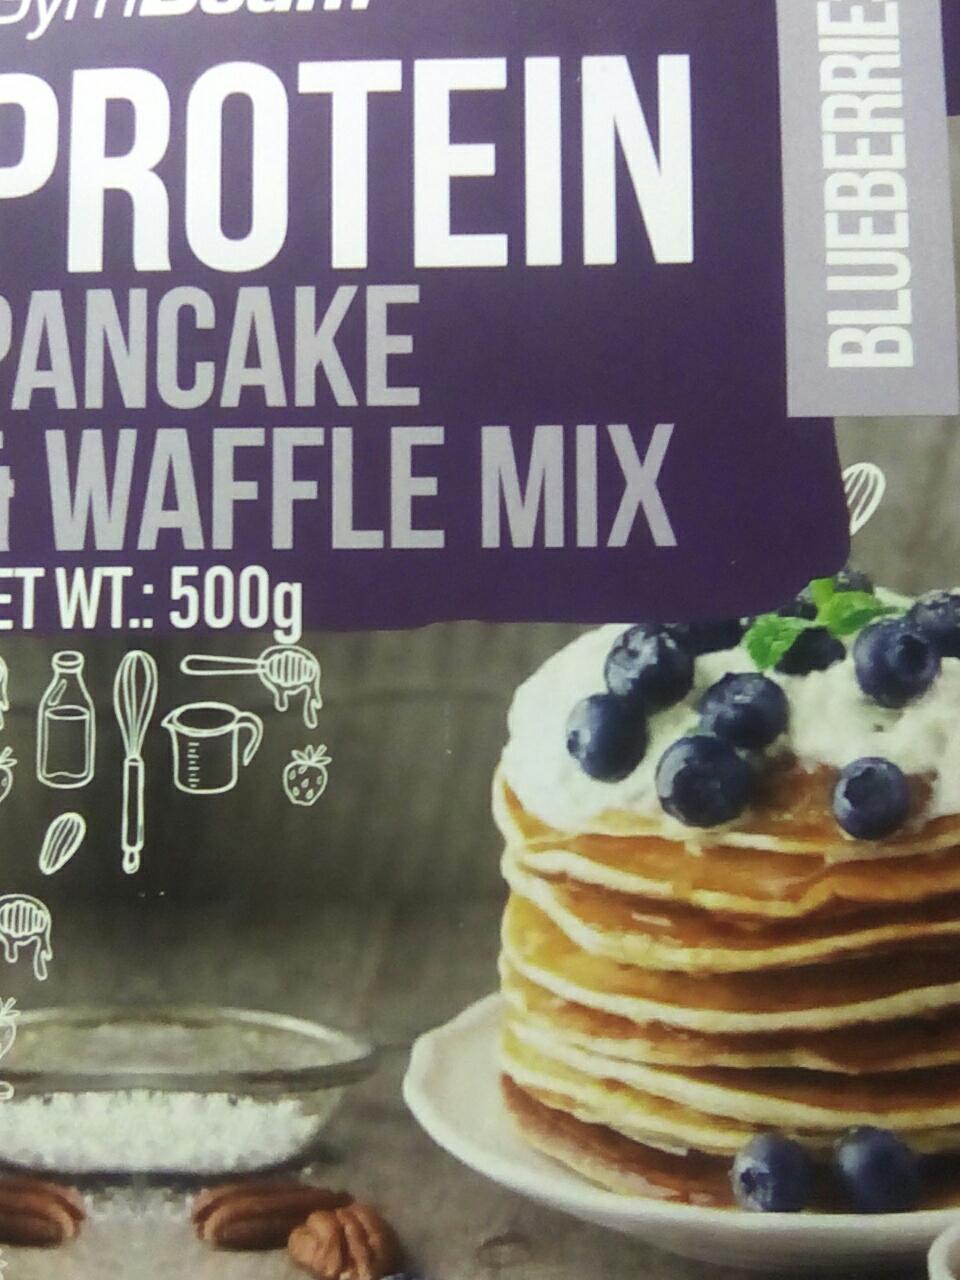 Fotografie - Protein Pancake & Waffle Mix Blueberries GymBeam